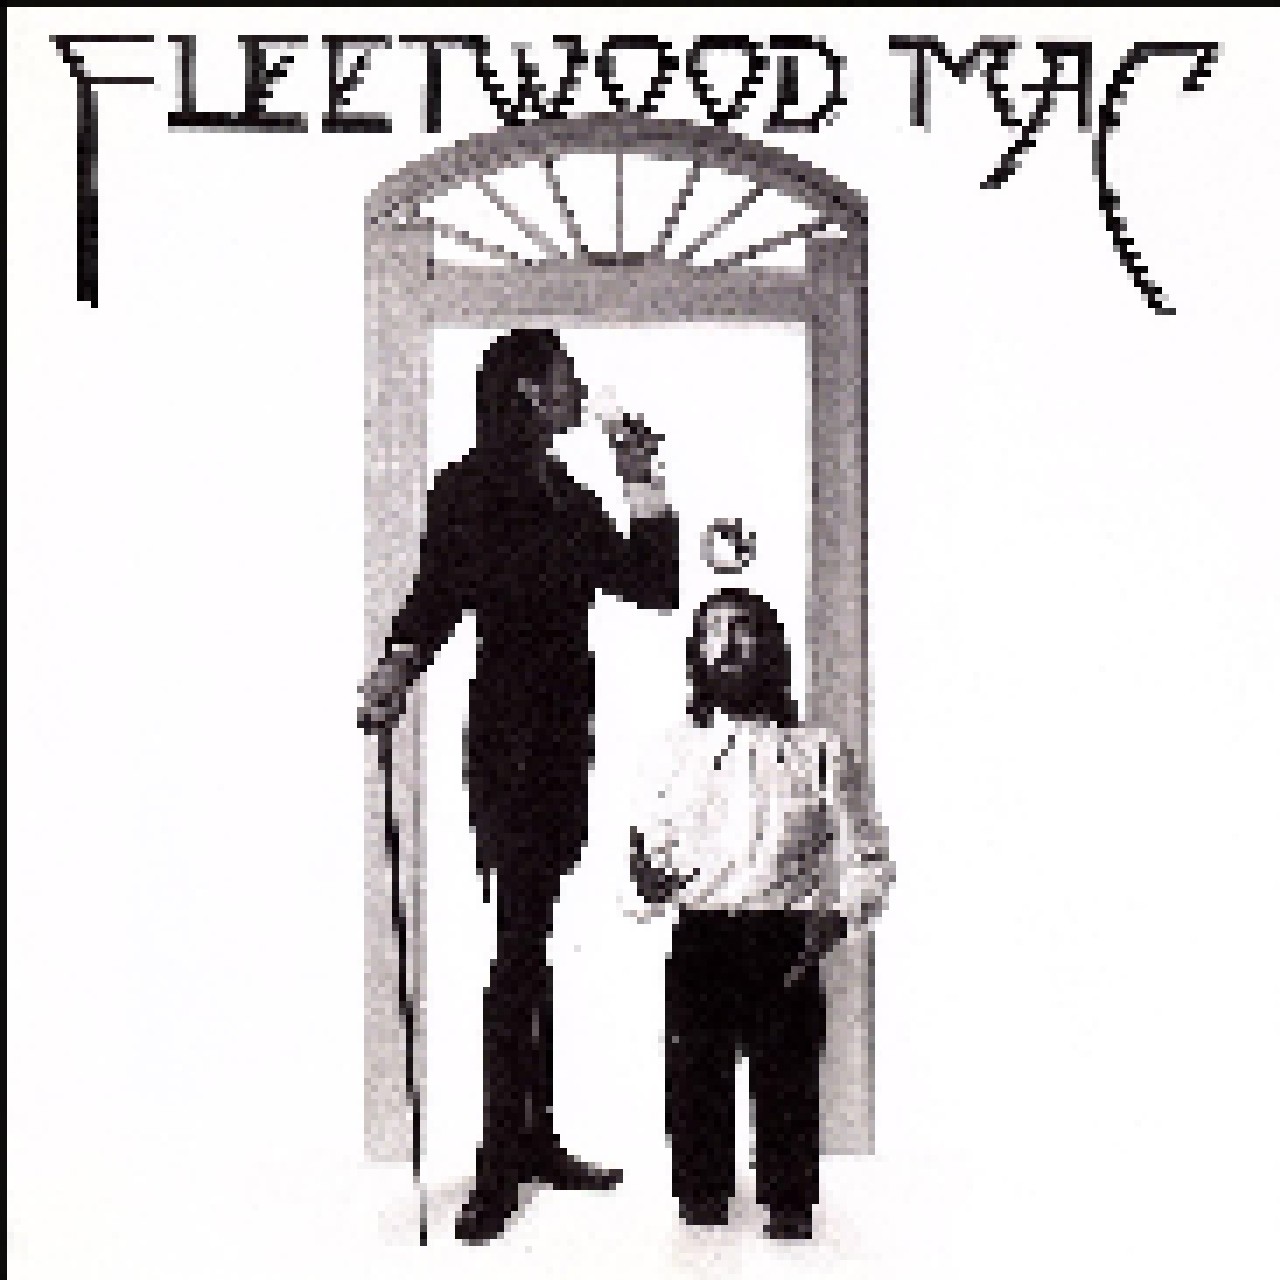 fleetwood mac albums in order of release